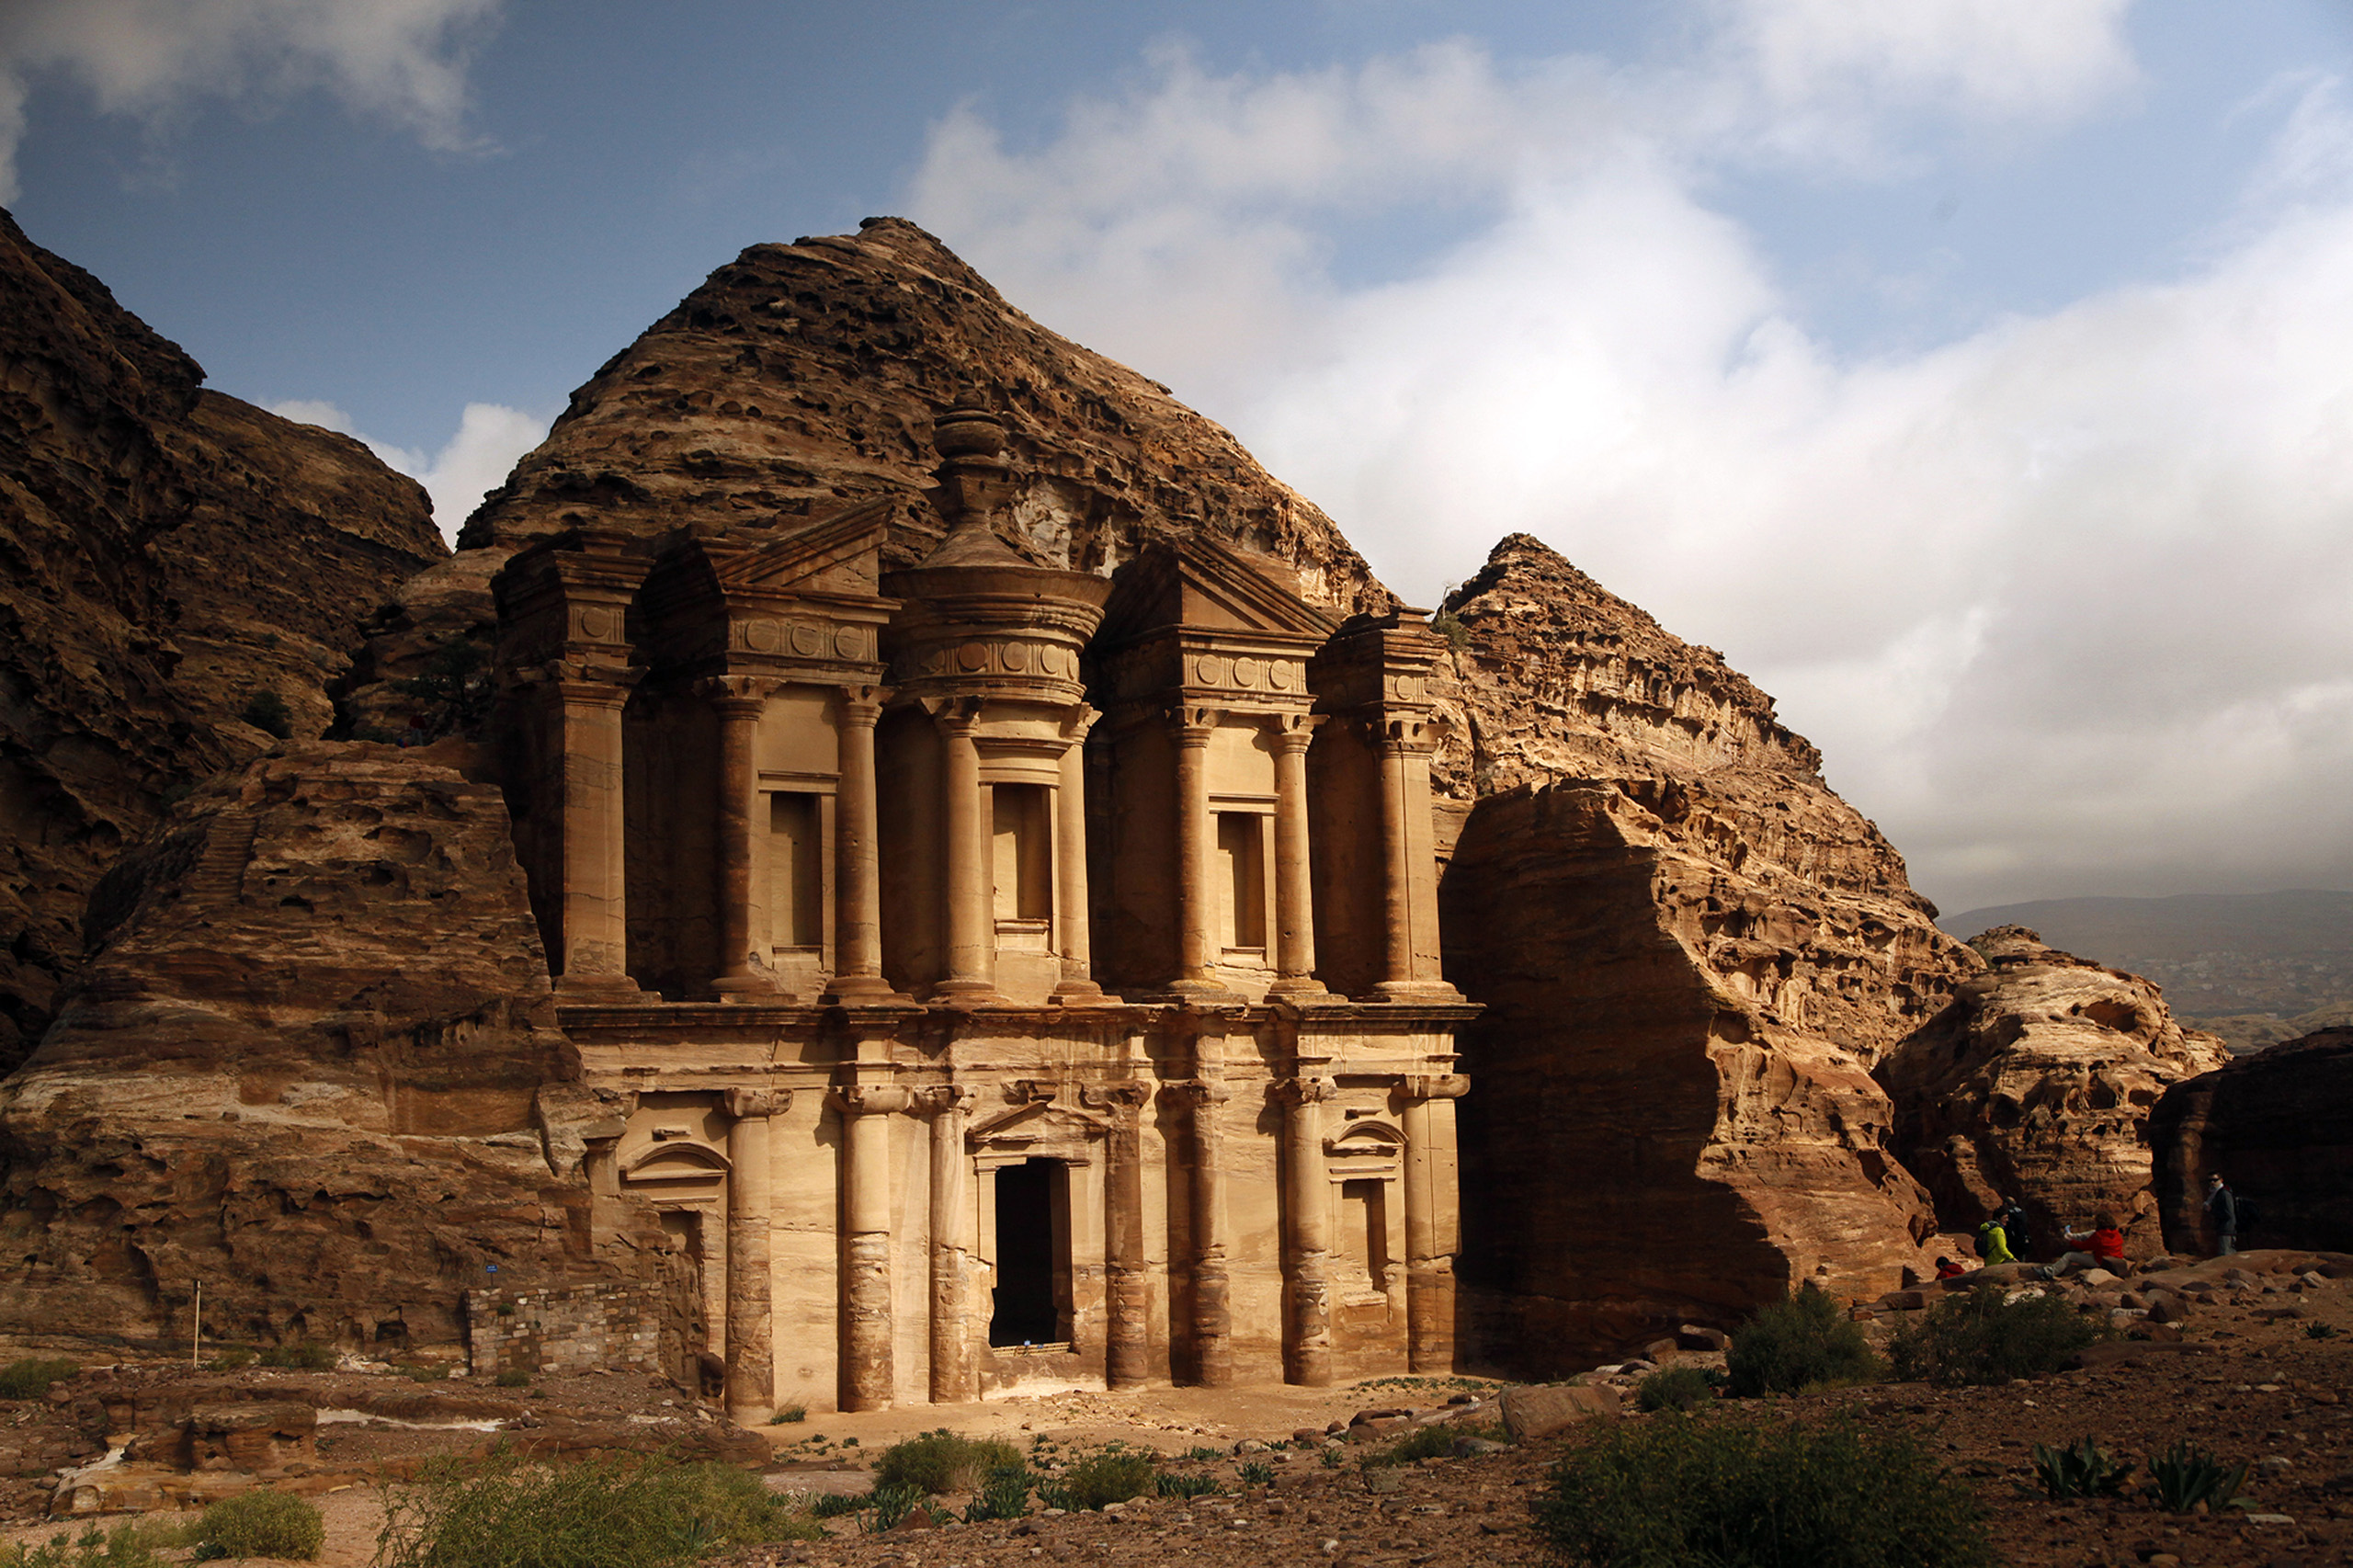 the monastery in petra, jordan